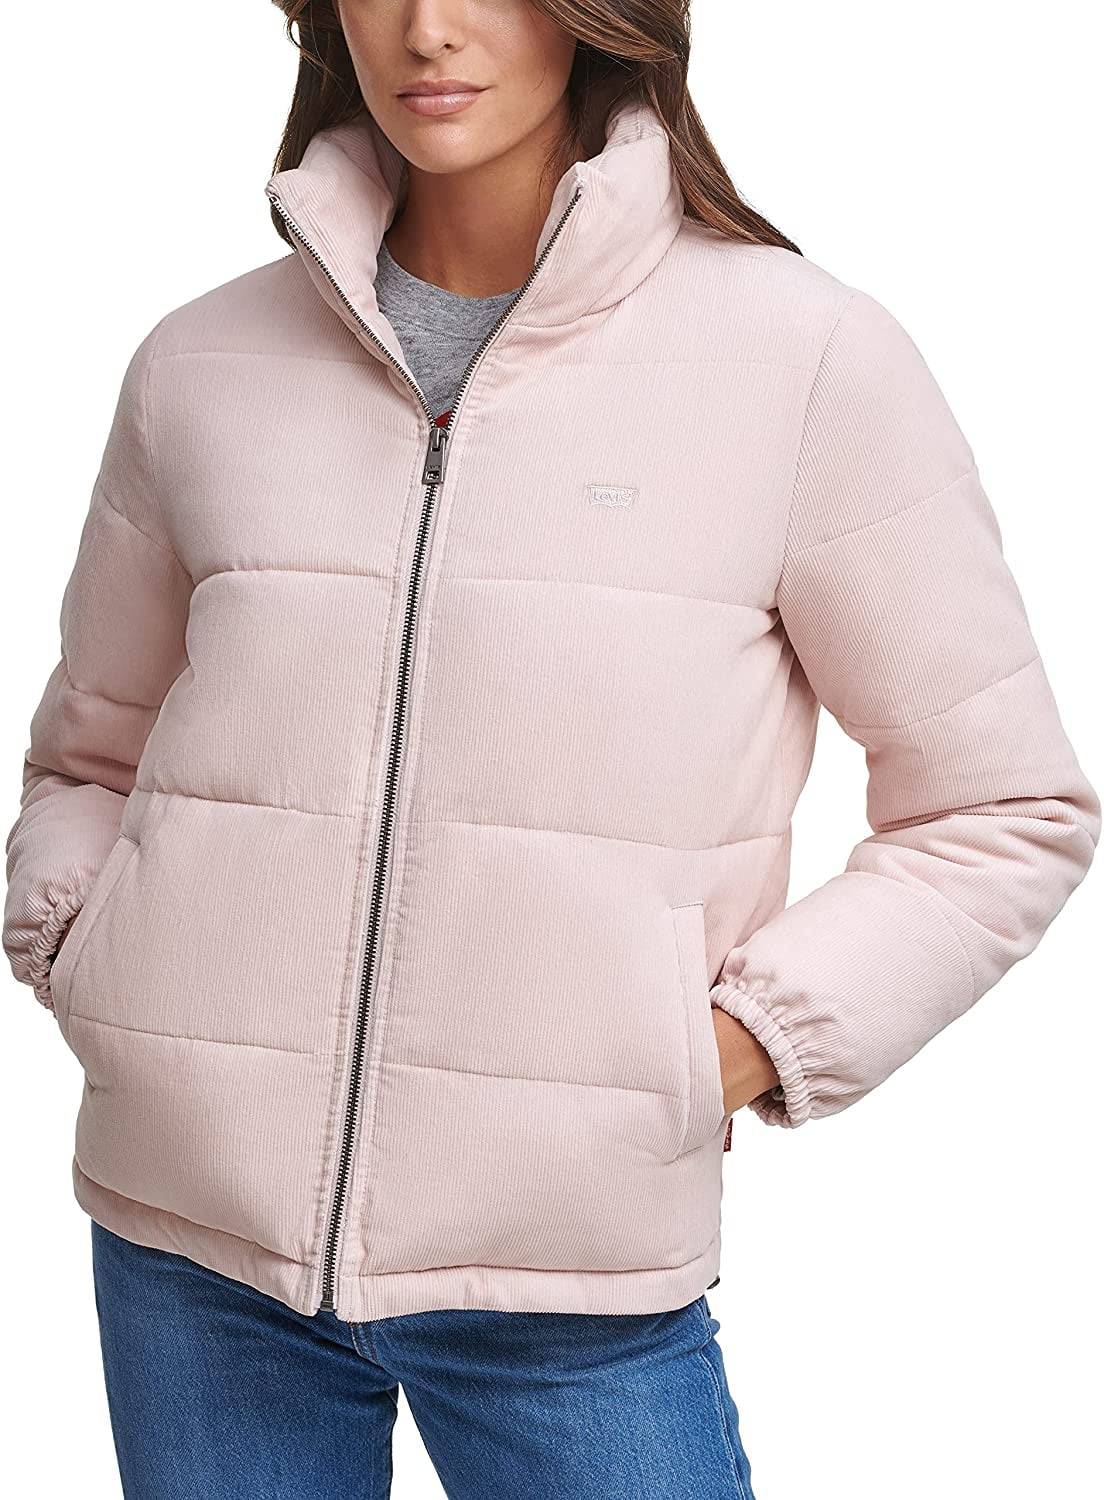 Levis Womens Zoe Corduroy Puffer Jacket Standard Plus Sizes X-Large Baby  Pink Corduroy 